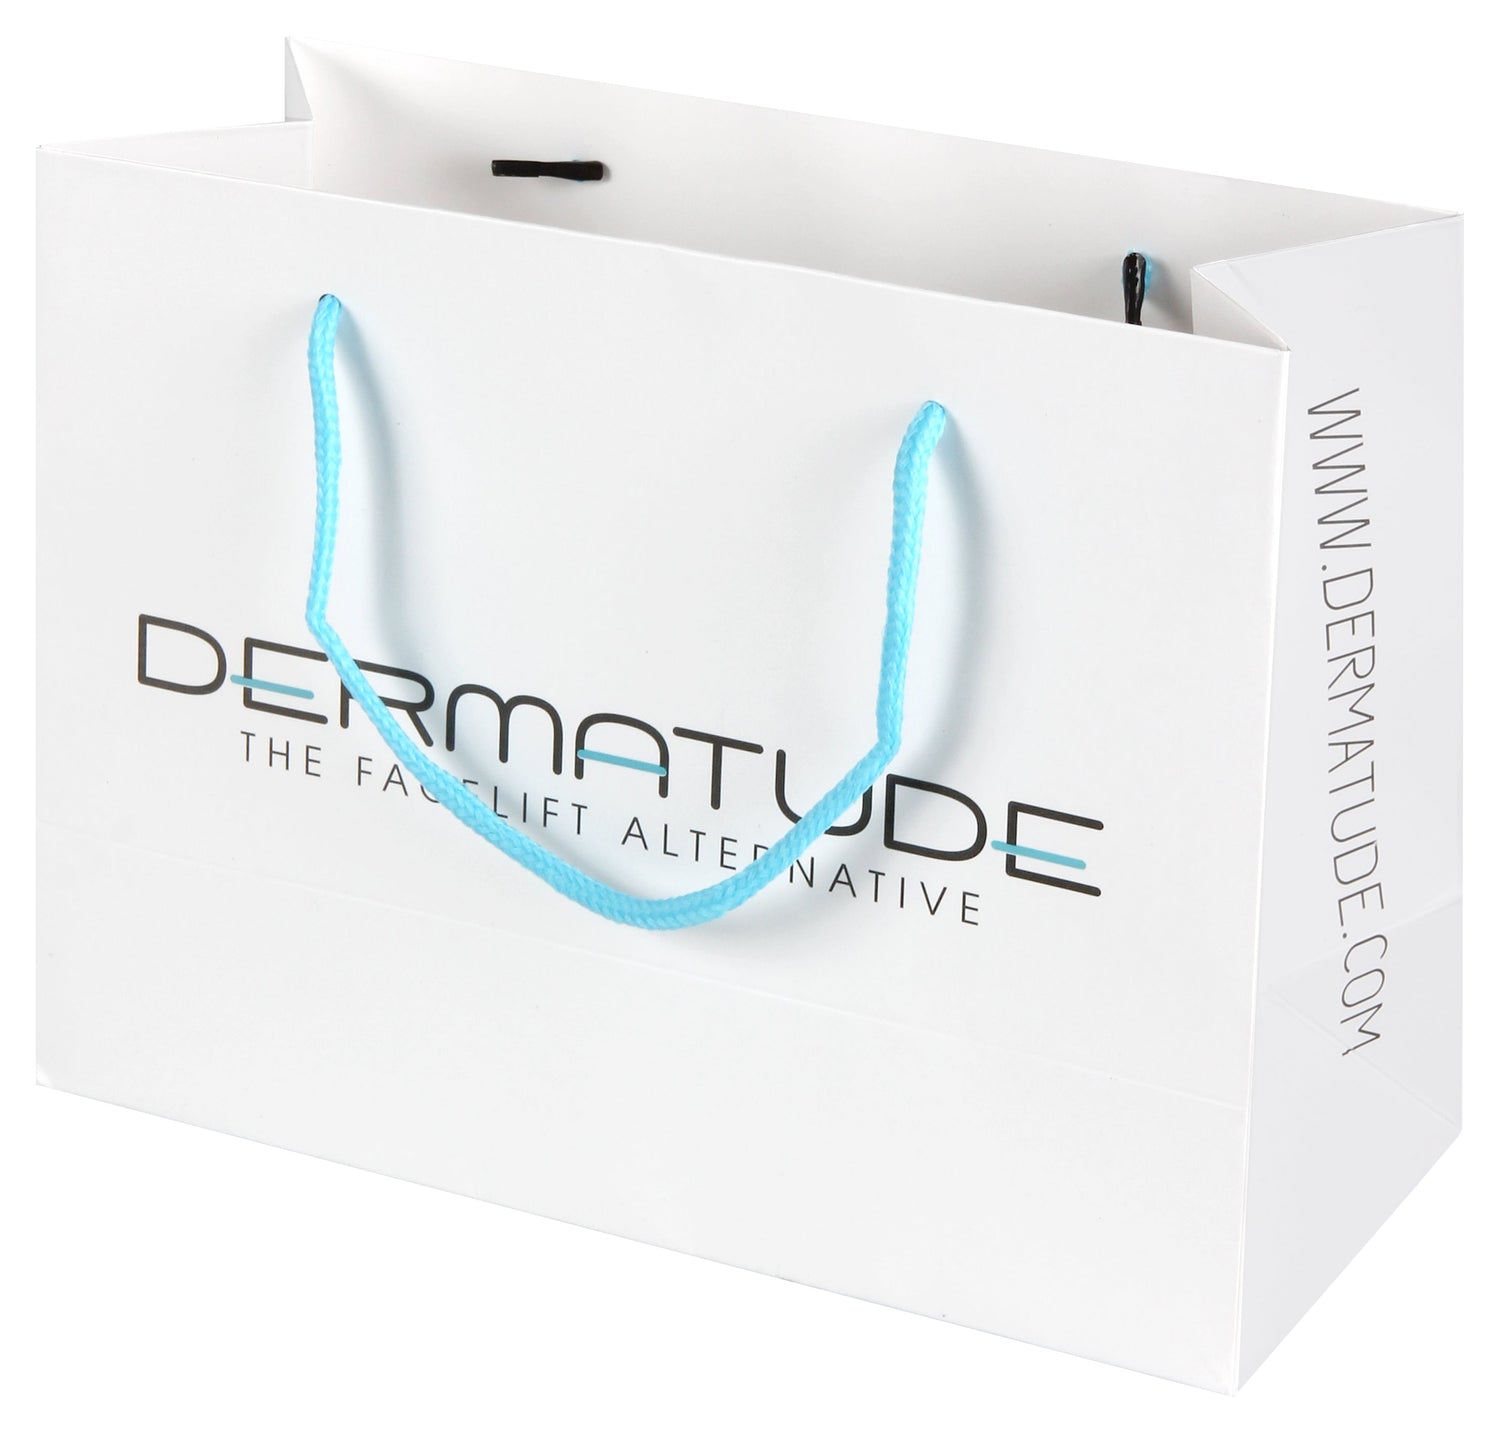 Dermatude, the Facelift Alternative